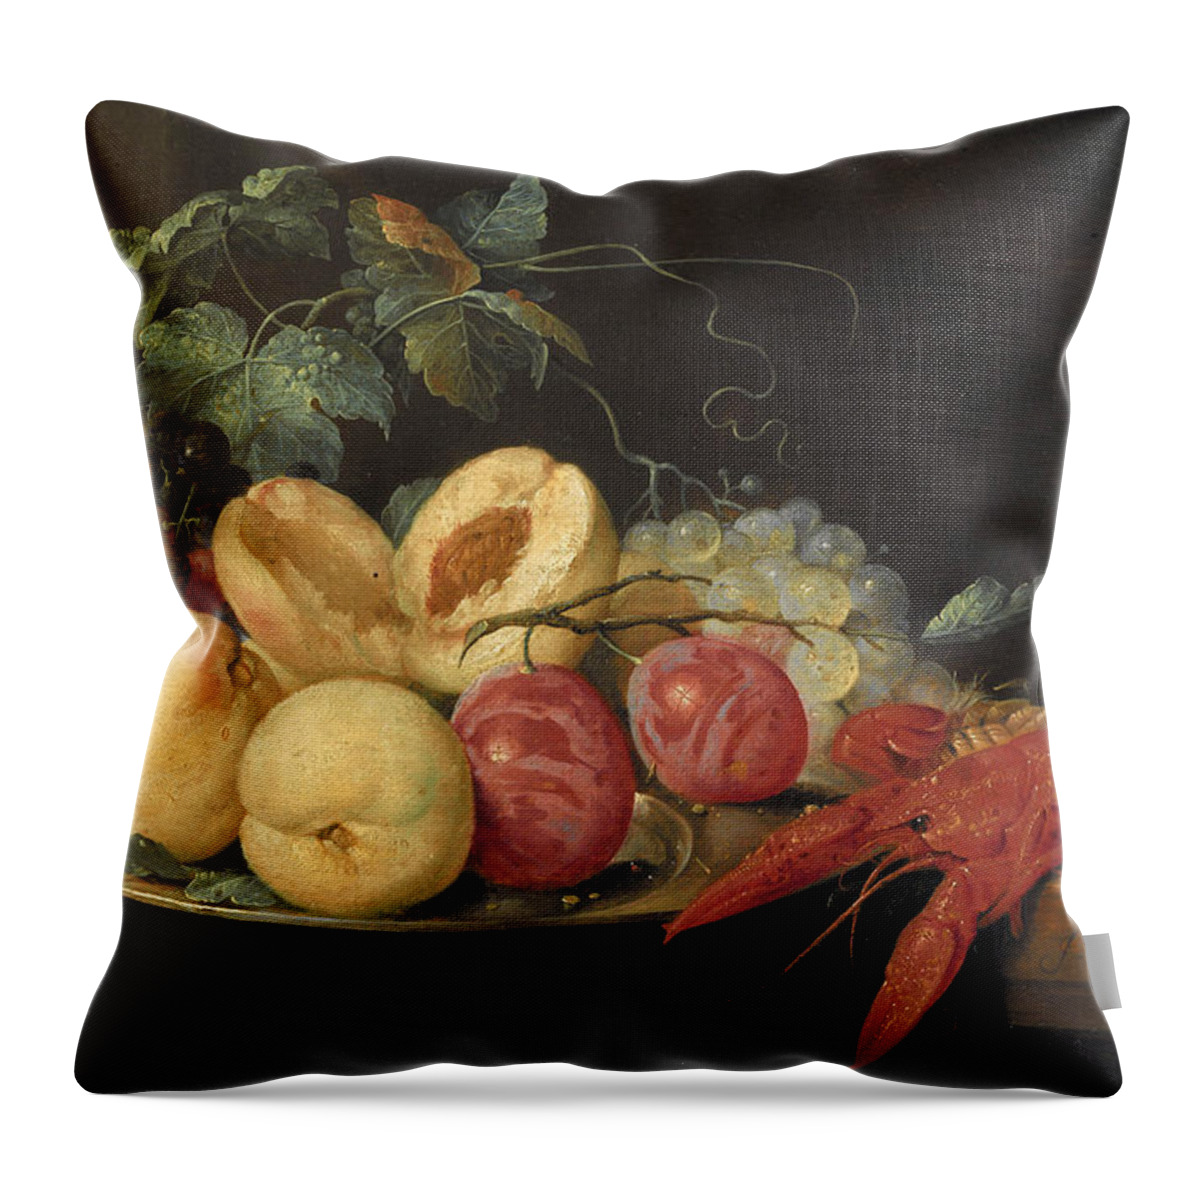 Joris Van Son Throw Pillow featuring the painting Still Life with Fruit and Boiled Crayfish by Joris van Son